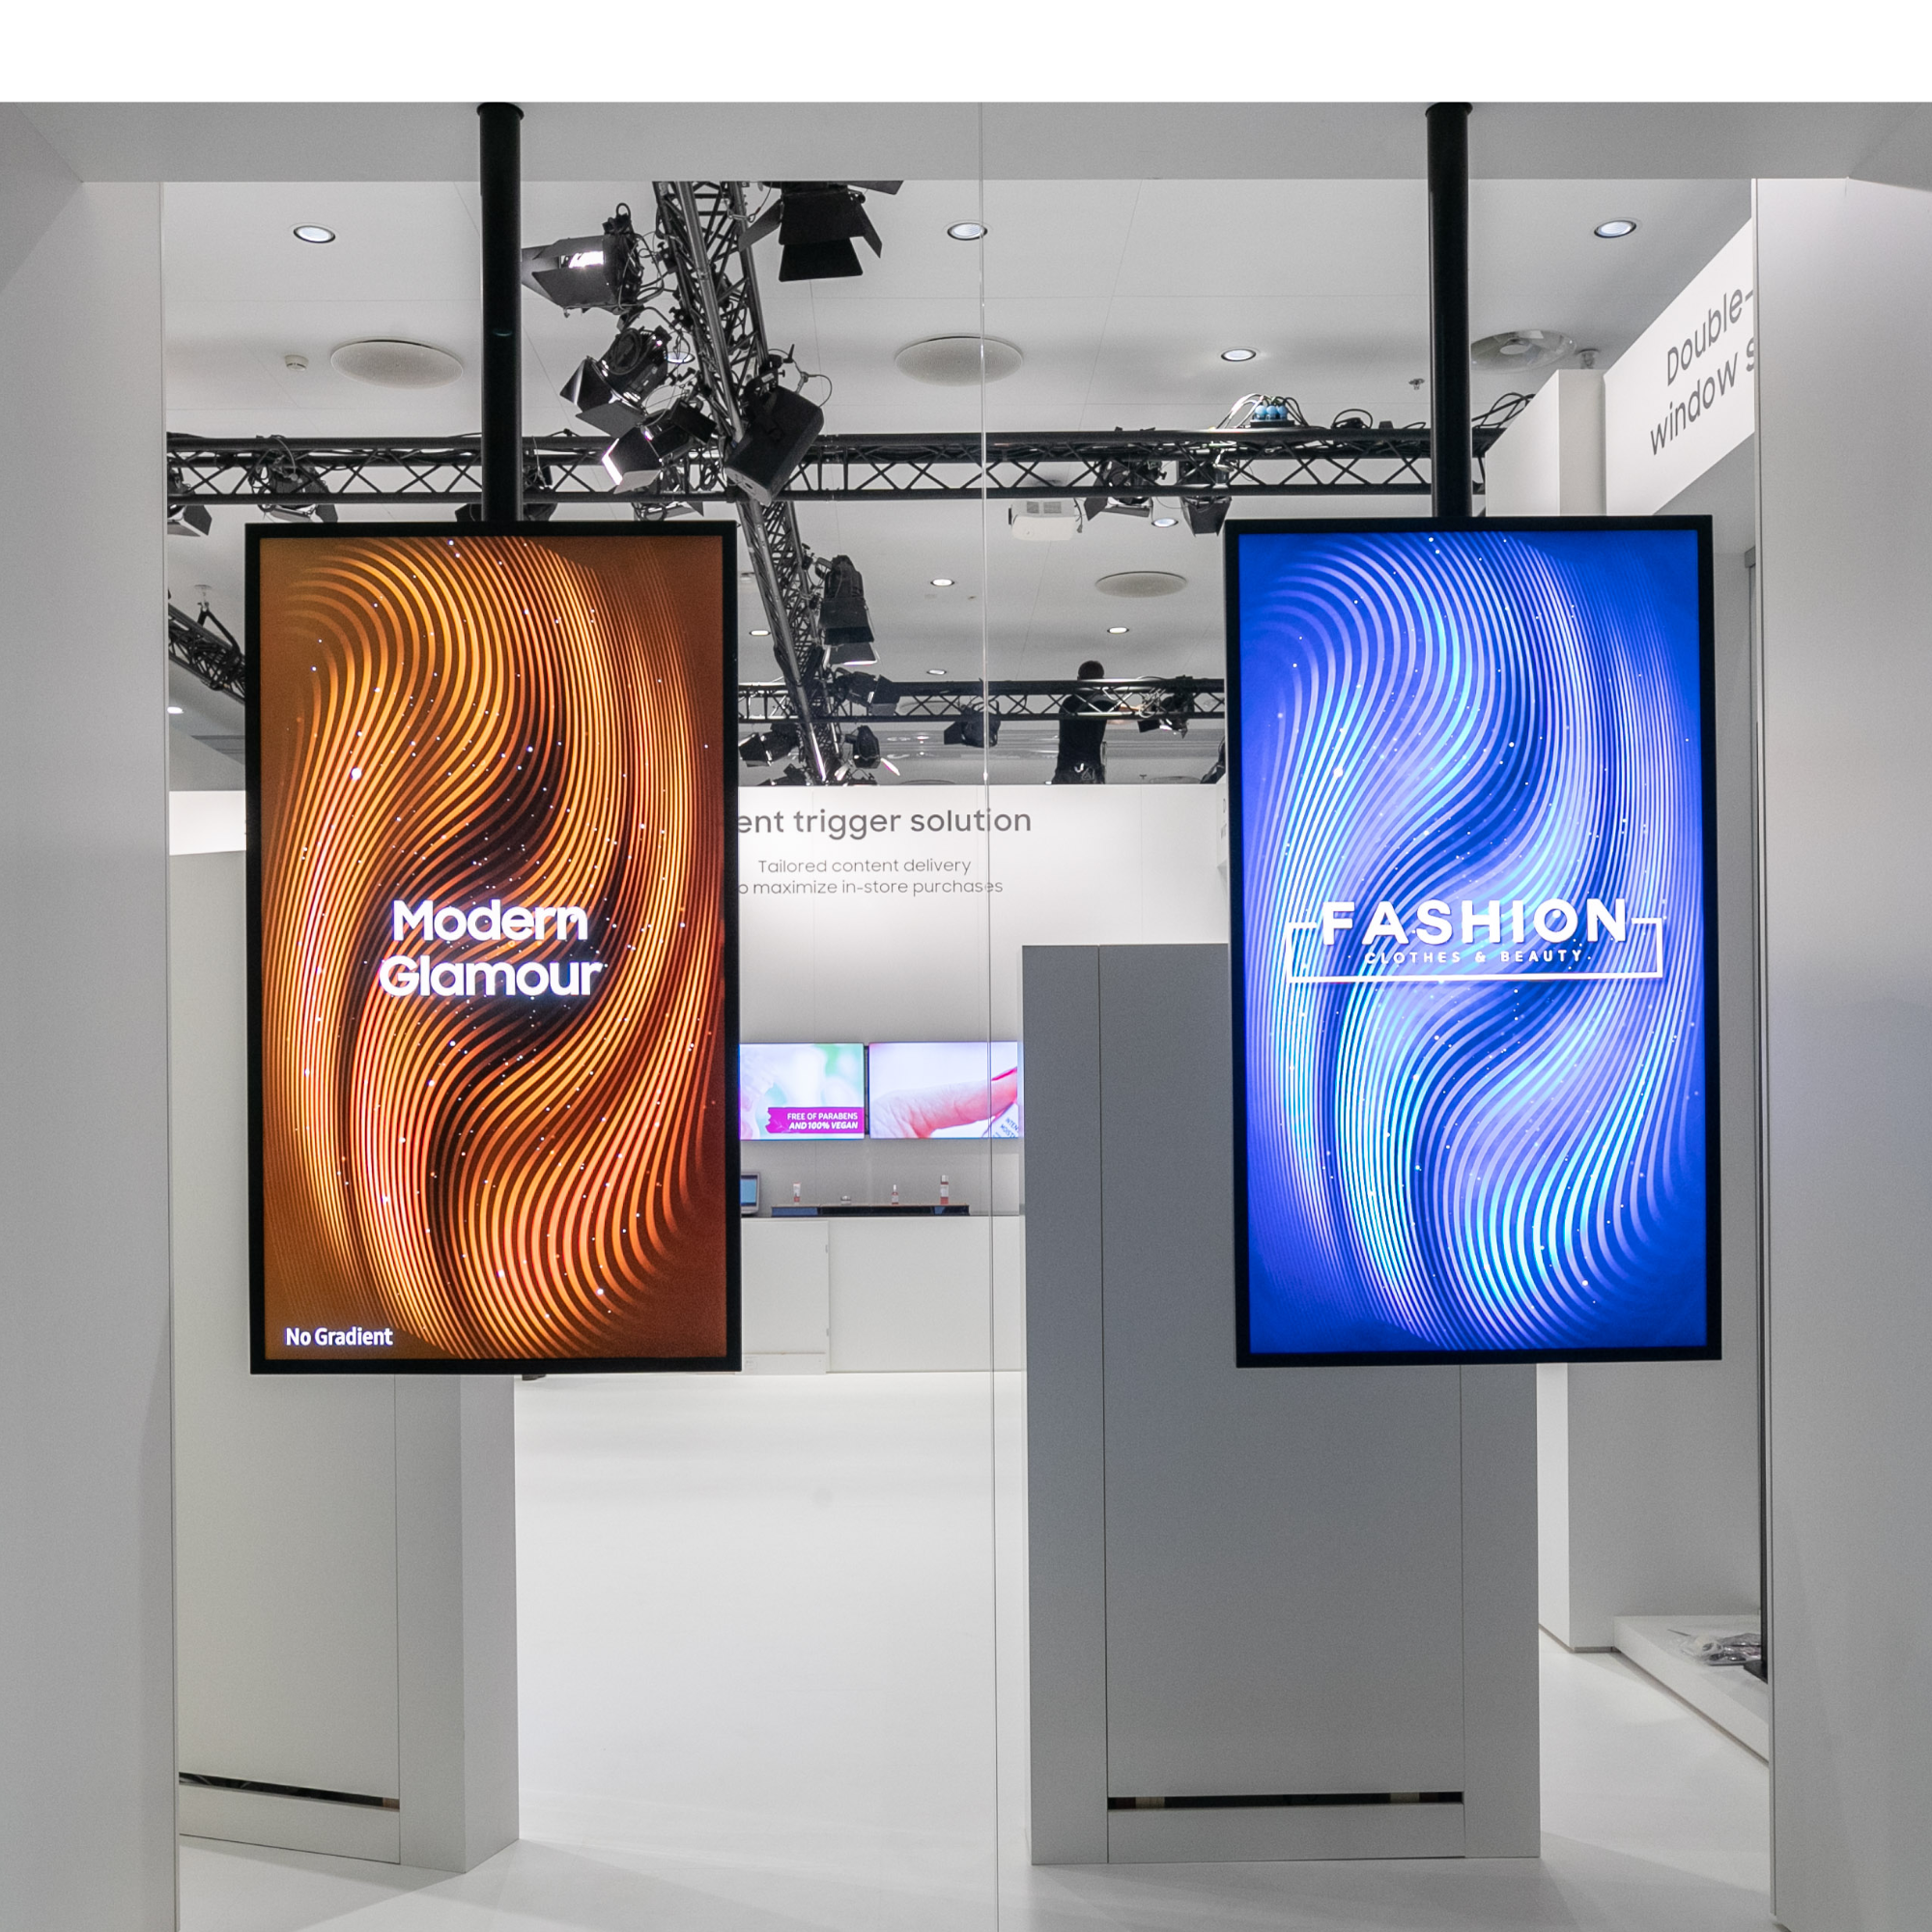 Samsung Digital Signage Displays